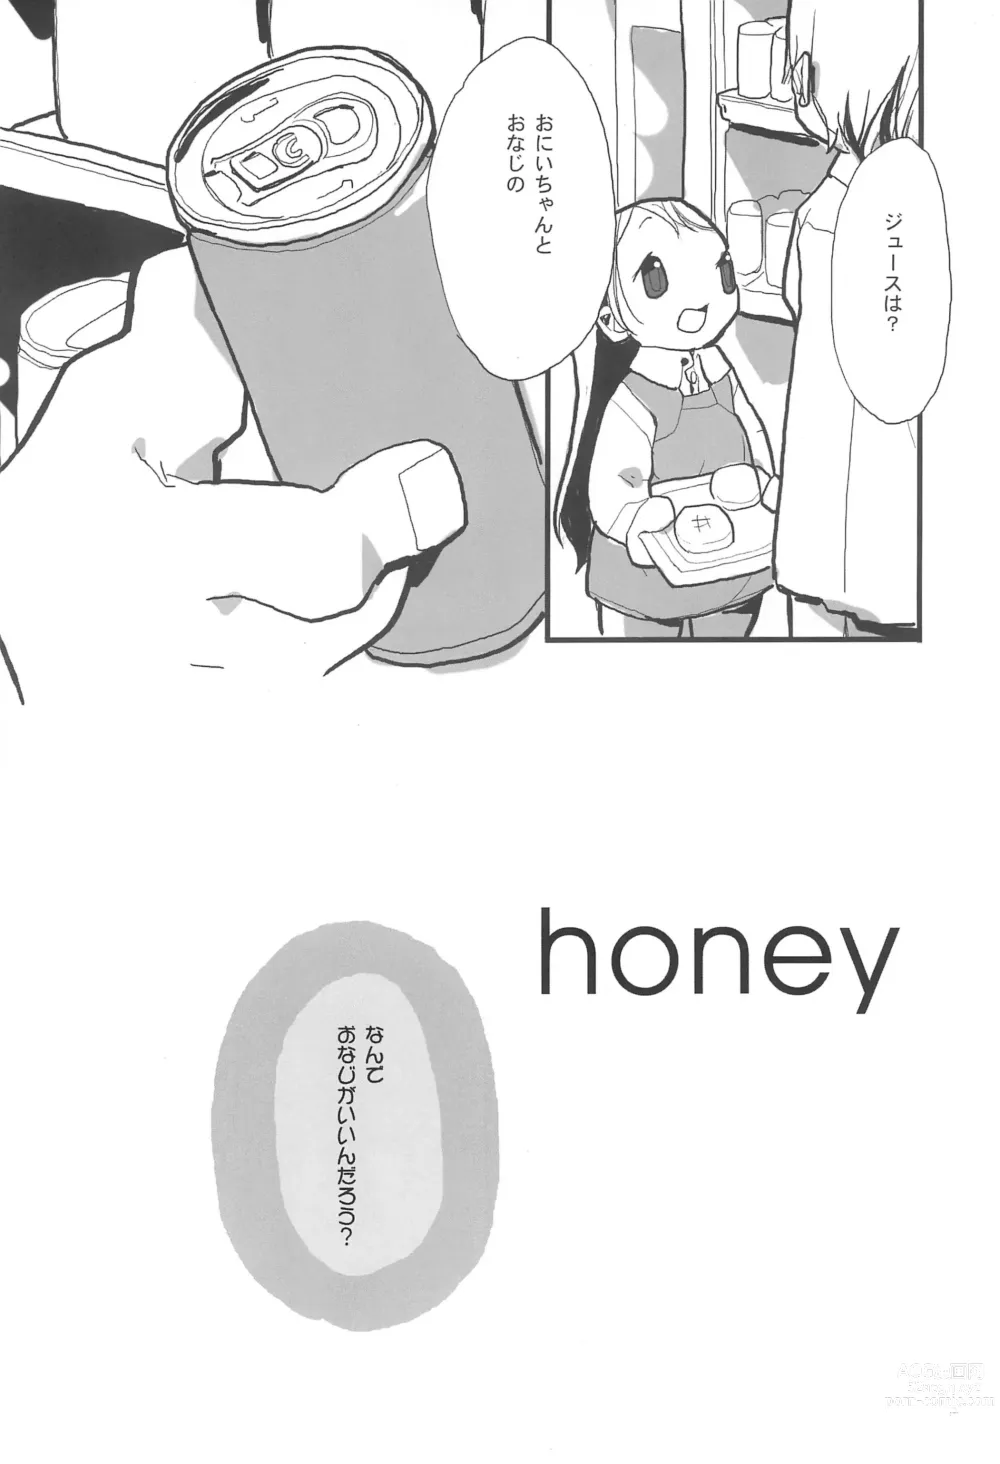 Page 6 of doujinshi honey